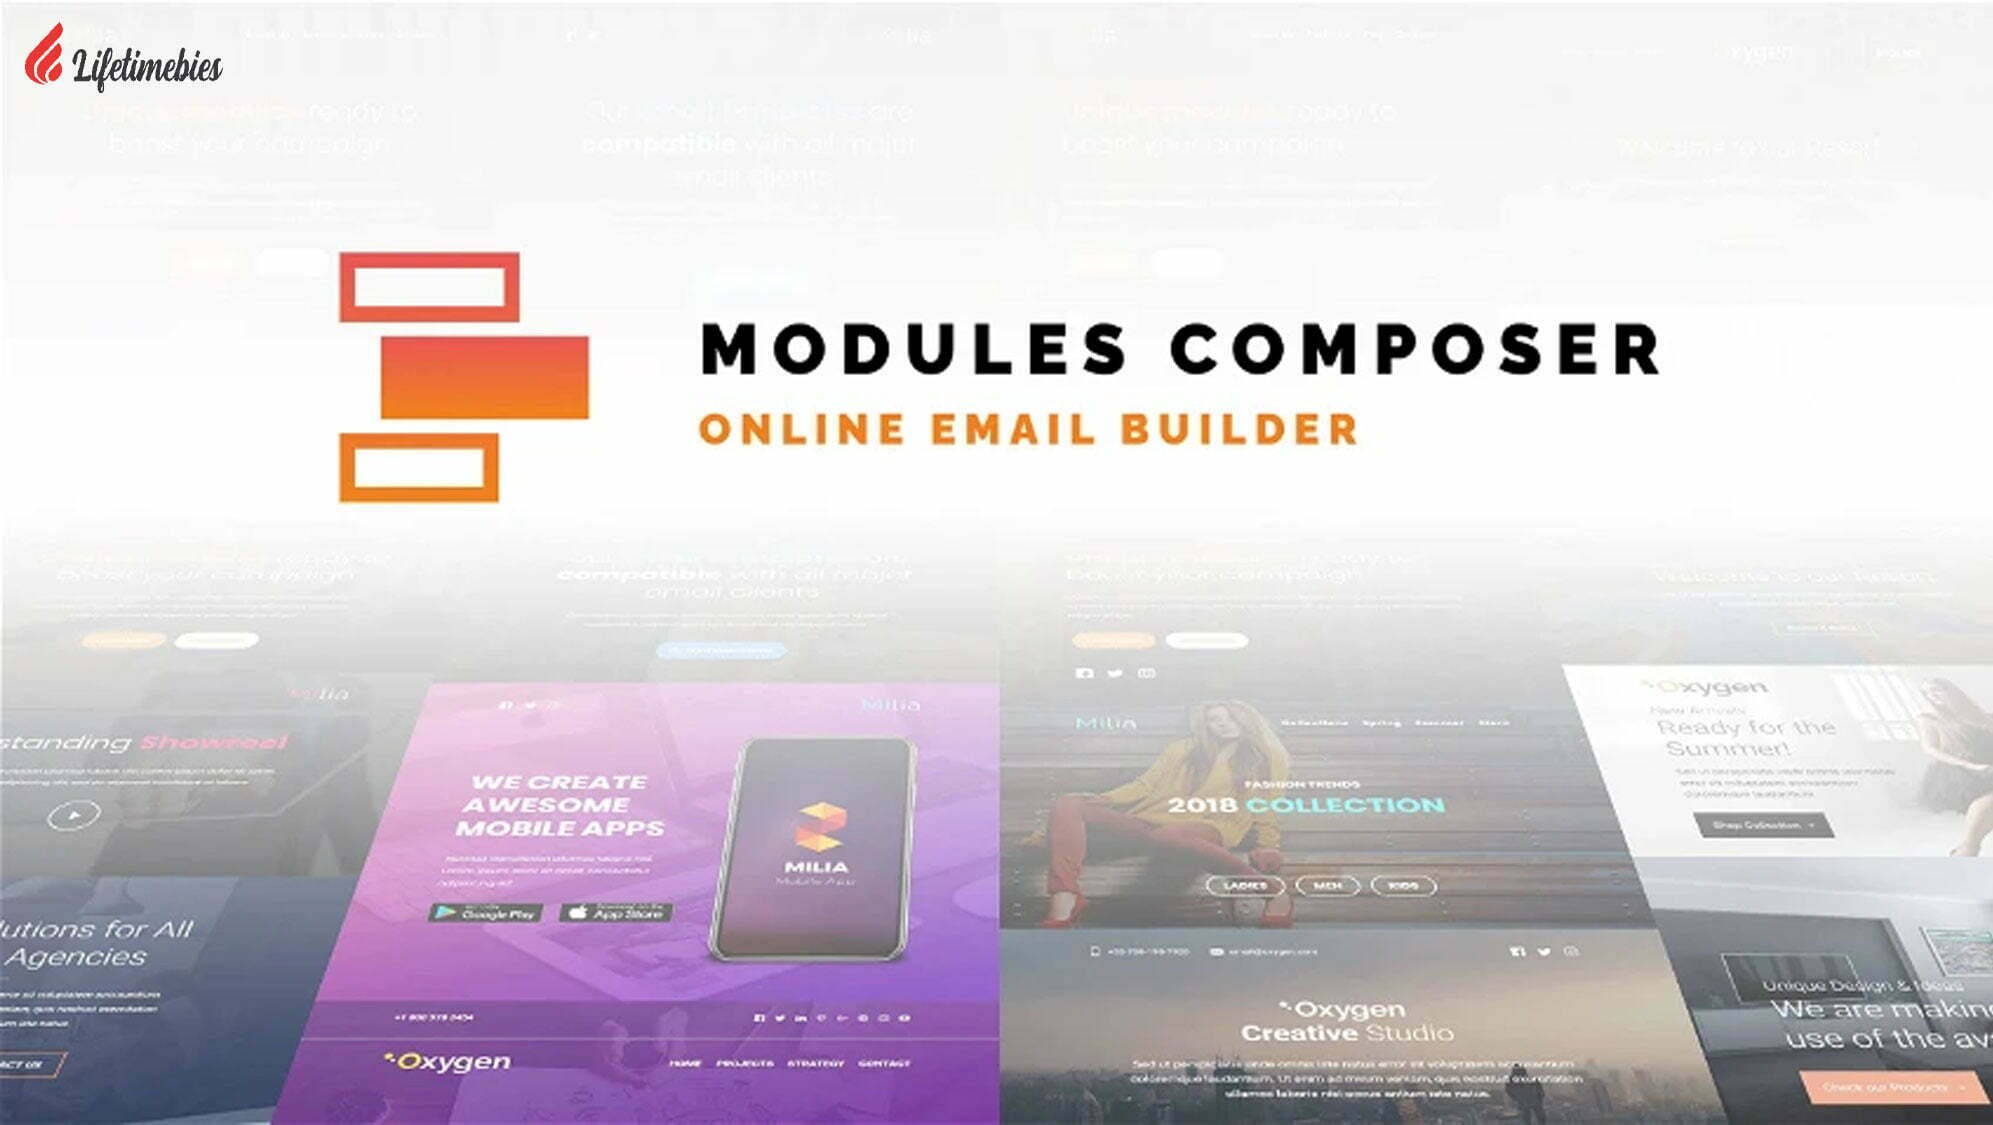 Modules-Composer-Lifetime-Deal